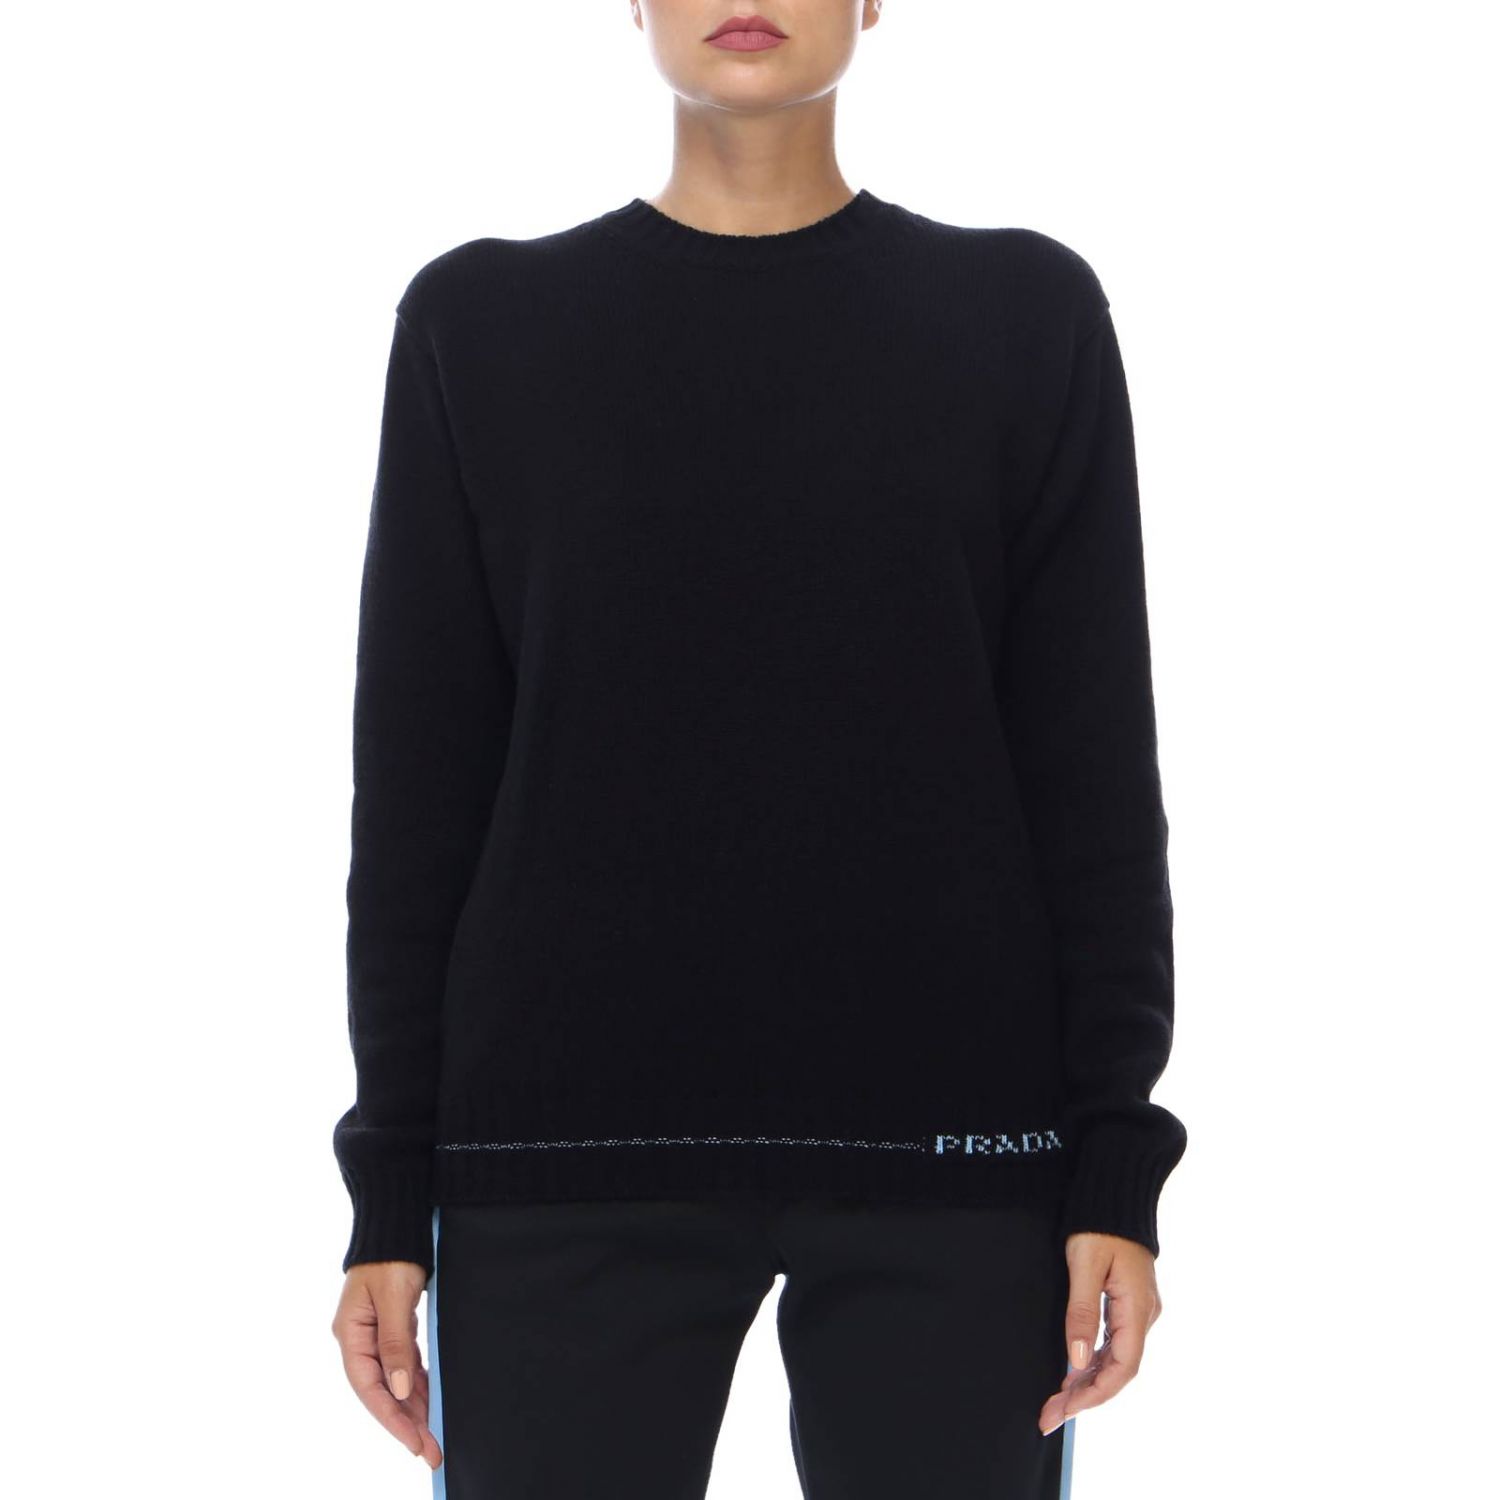 Sweater women Prada | Sweater Prada Women Black | Sweater Prada 124B50 ...